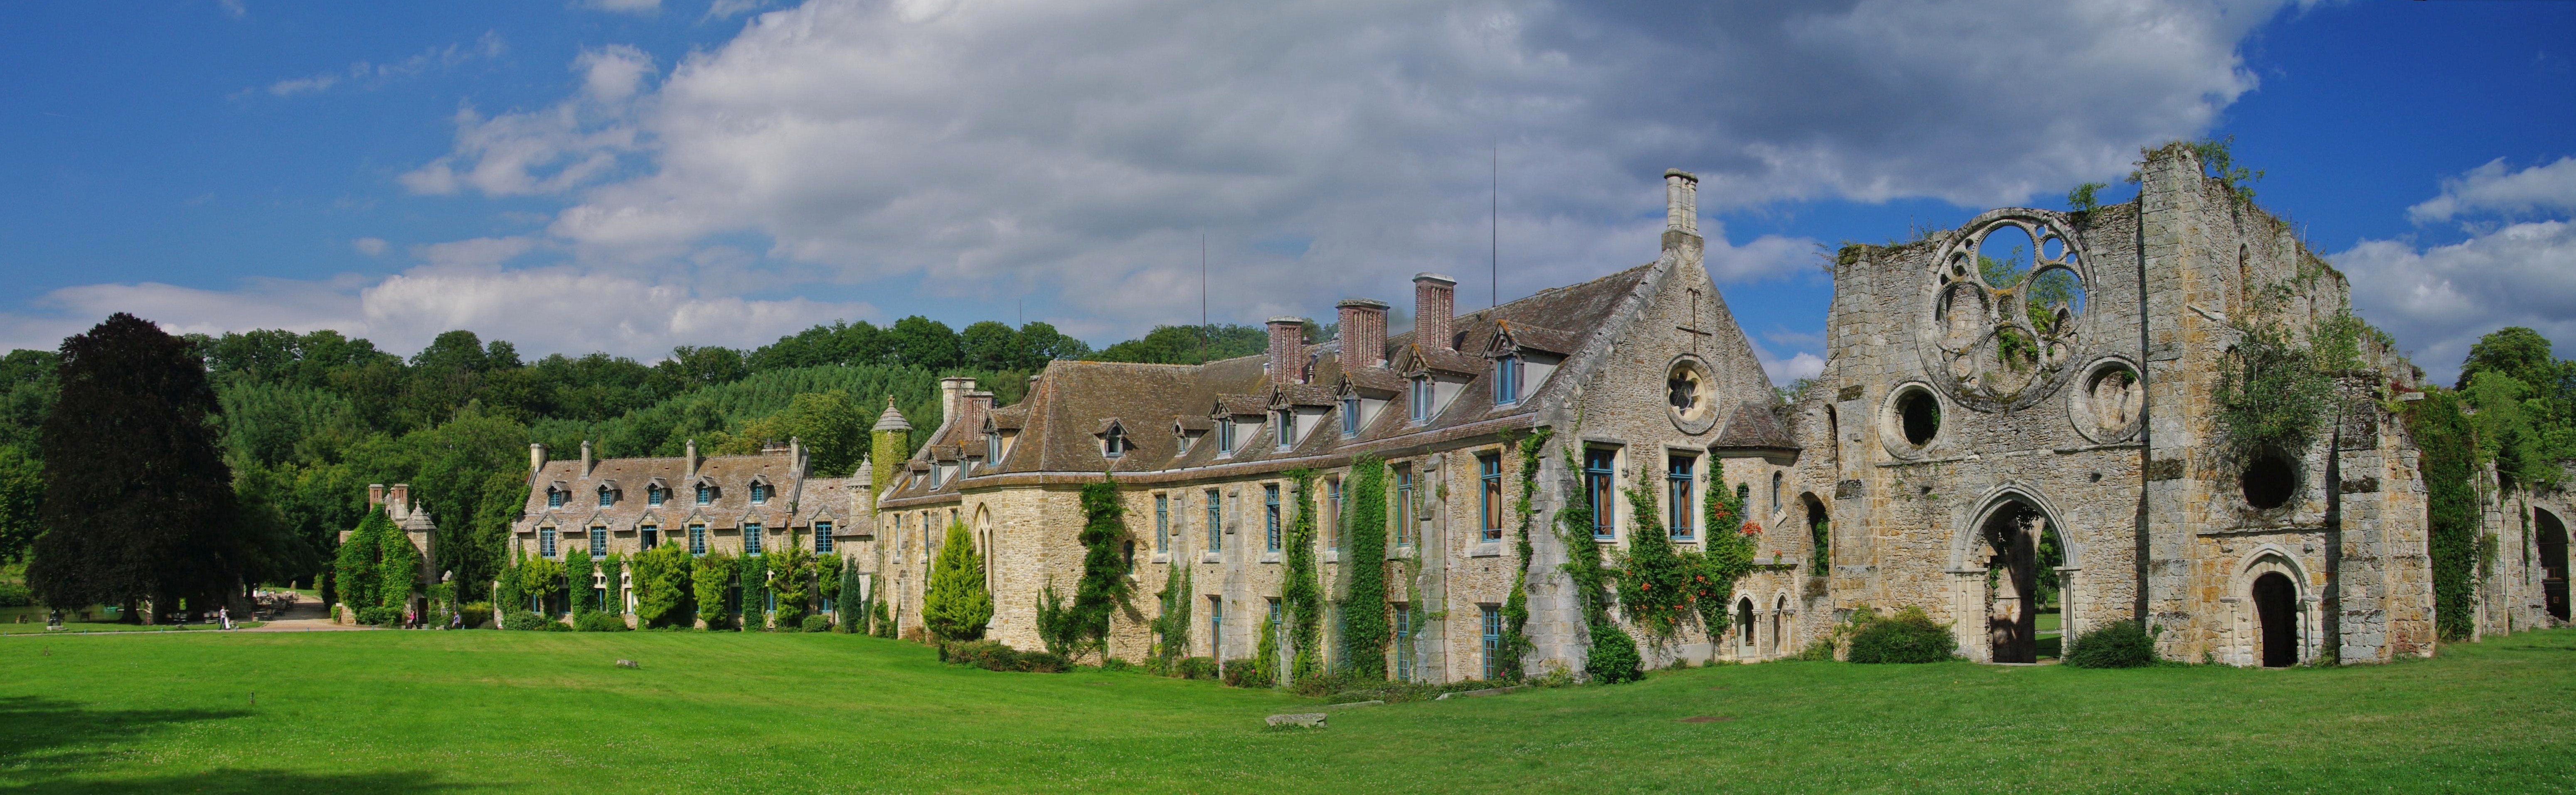 1409-abbaye-des-vaux-de-cernay-cernay-la-ville-yvelines-ile-de-france.jpg